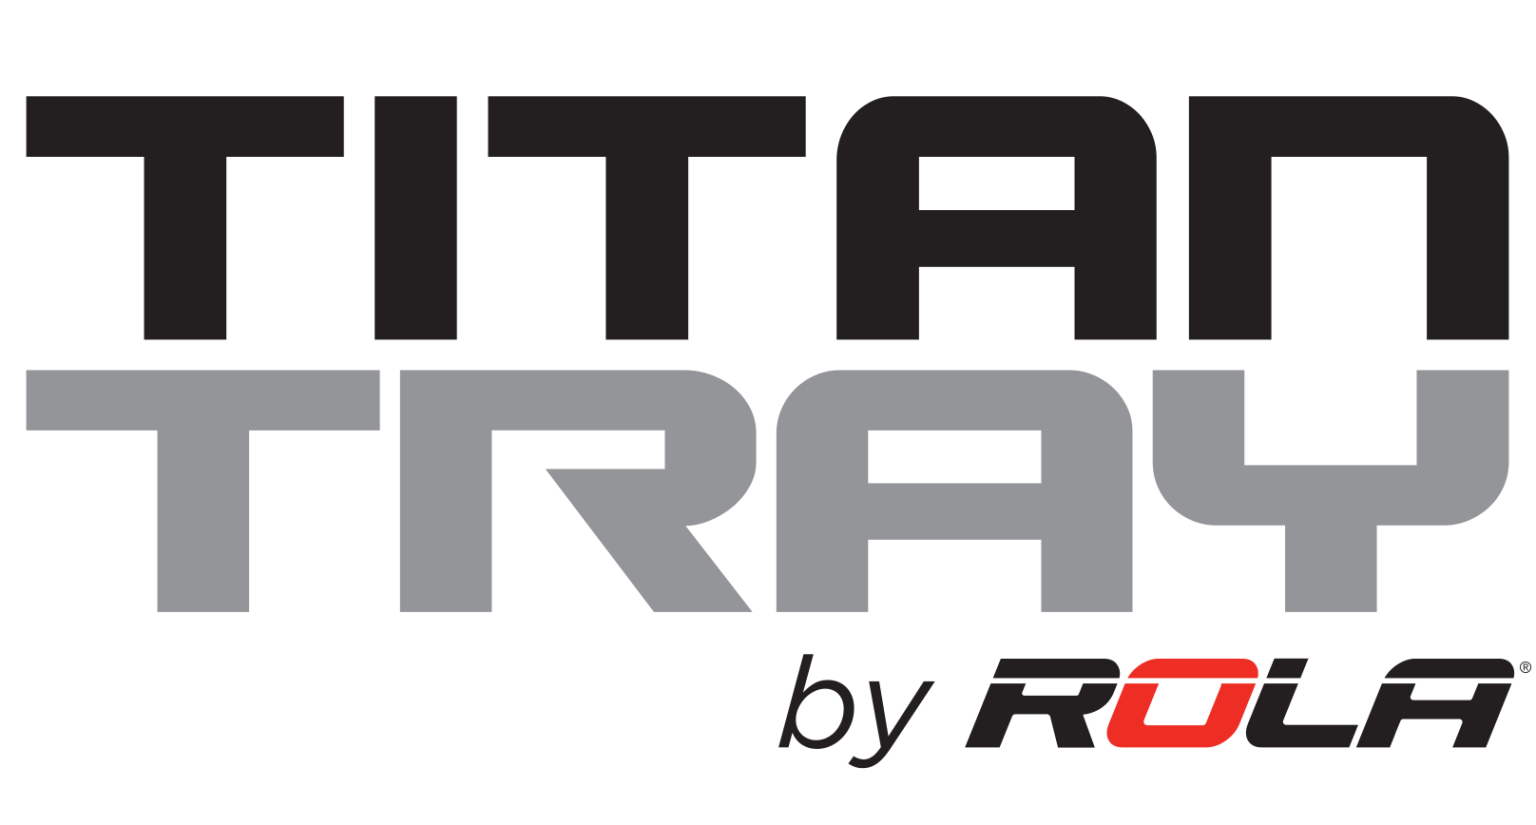 05440c7b/titan tray png